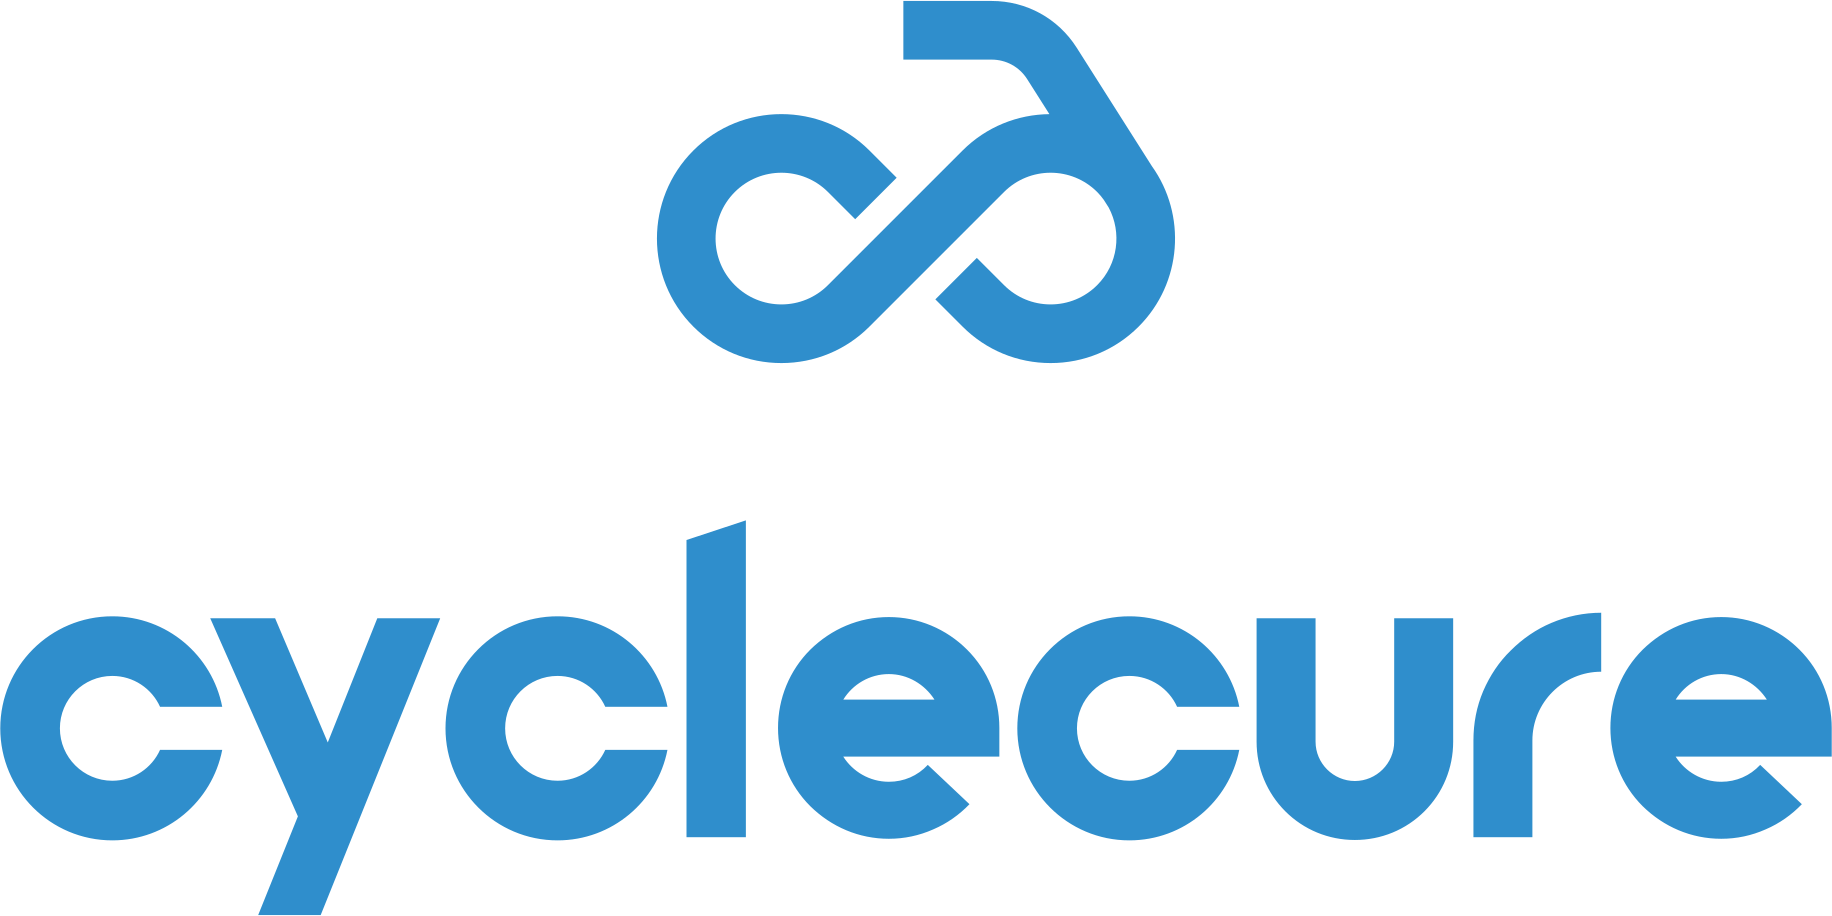 Cyclecure full logo